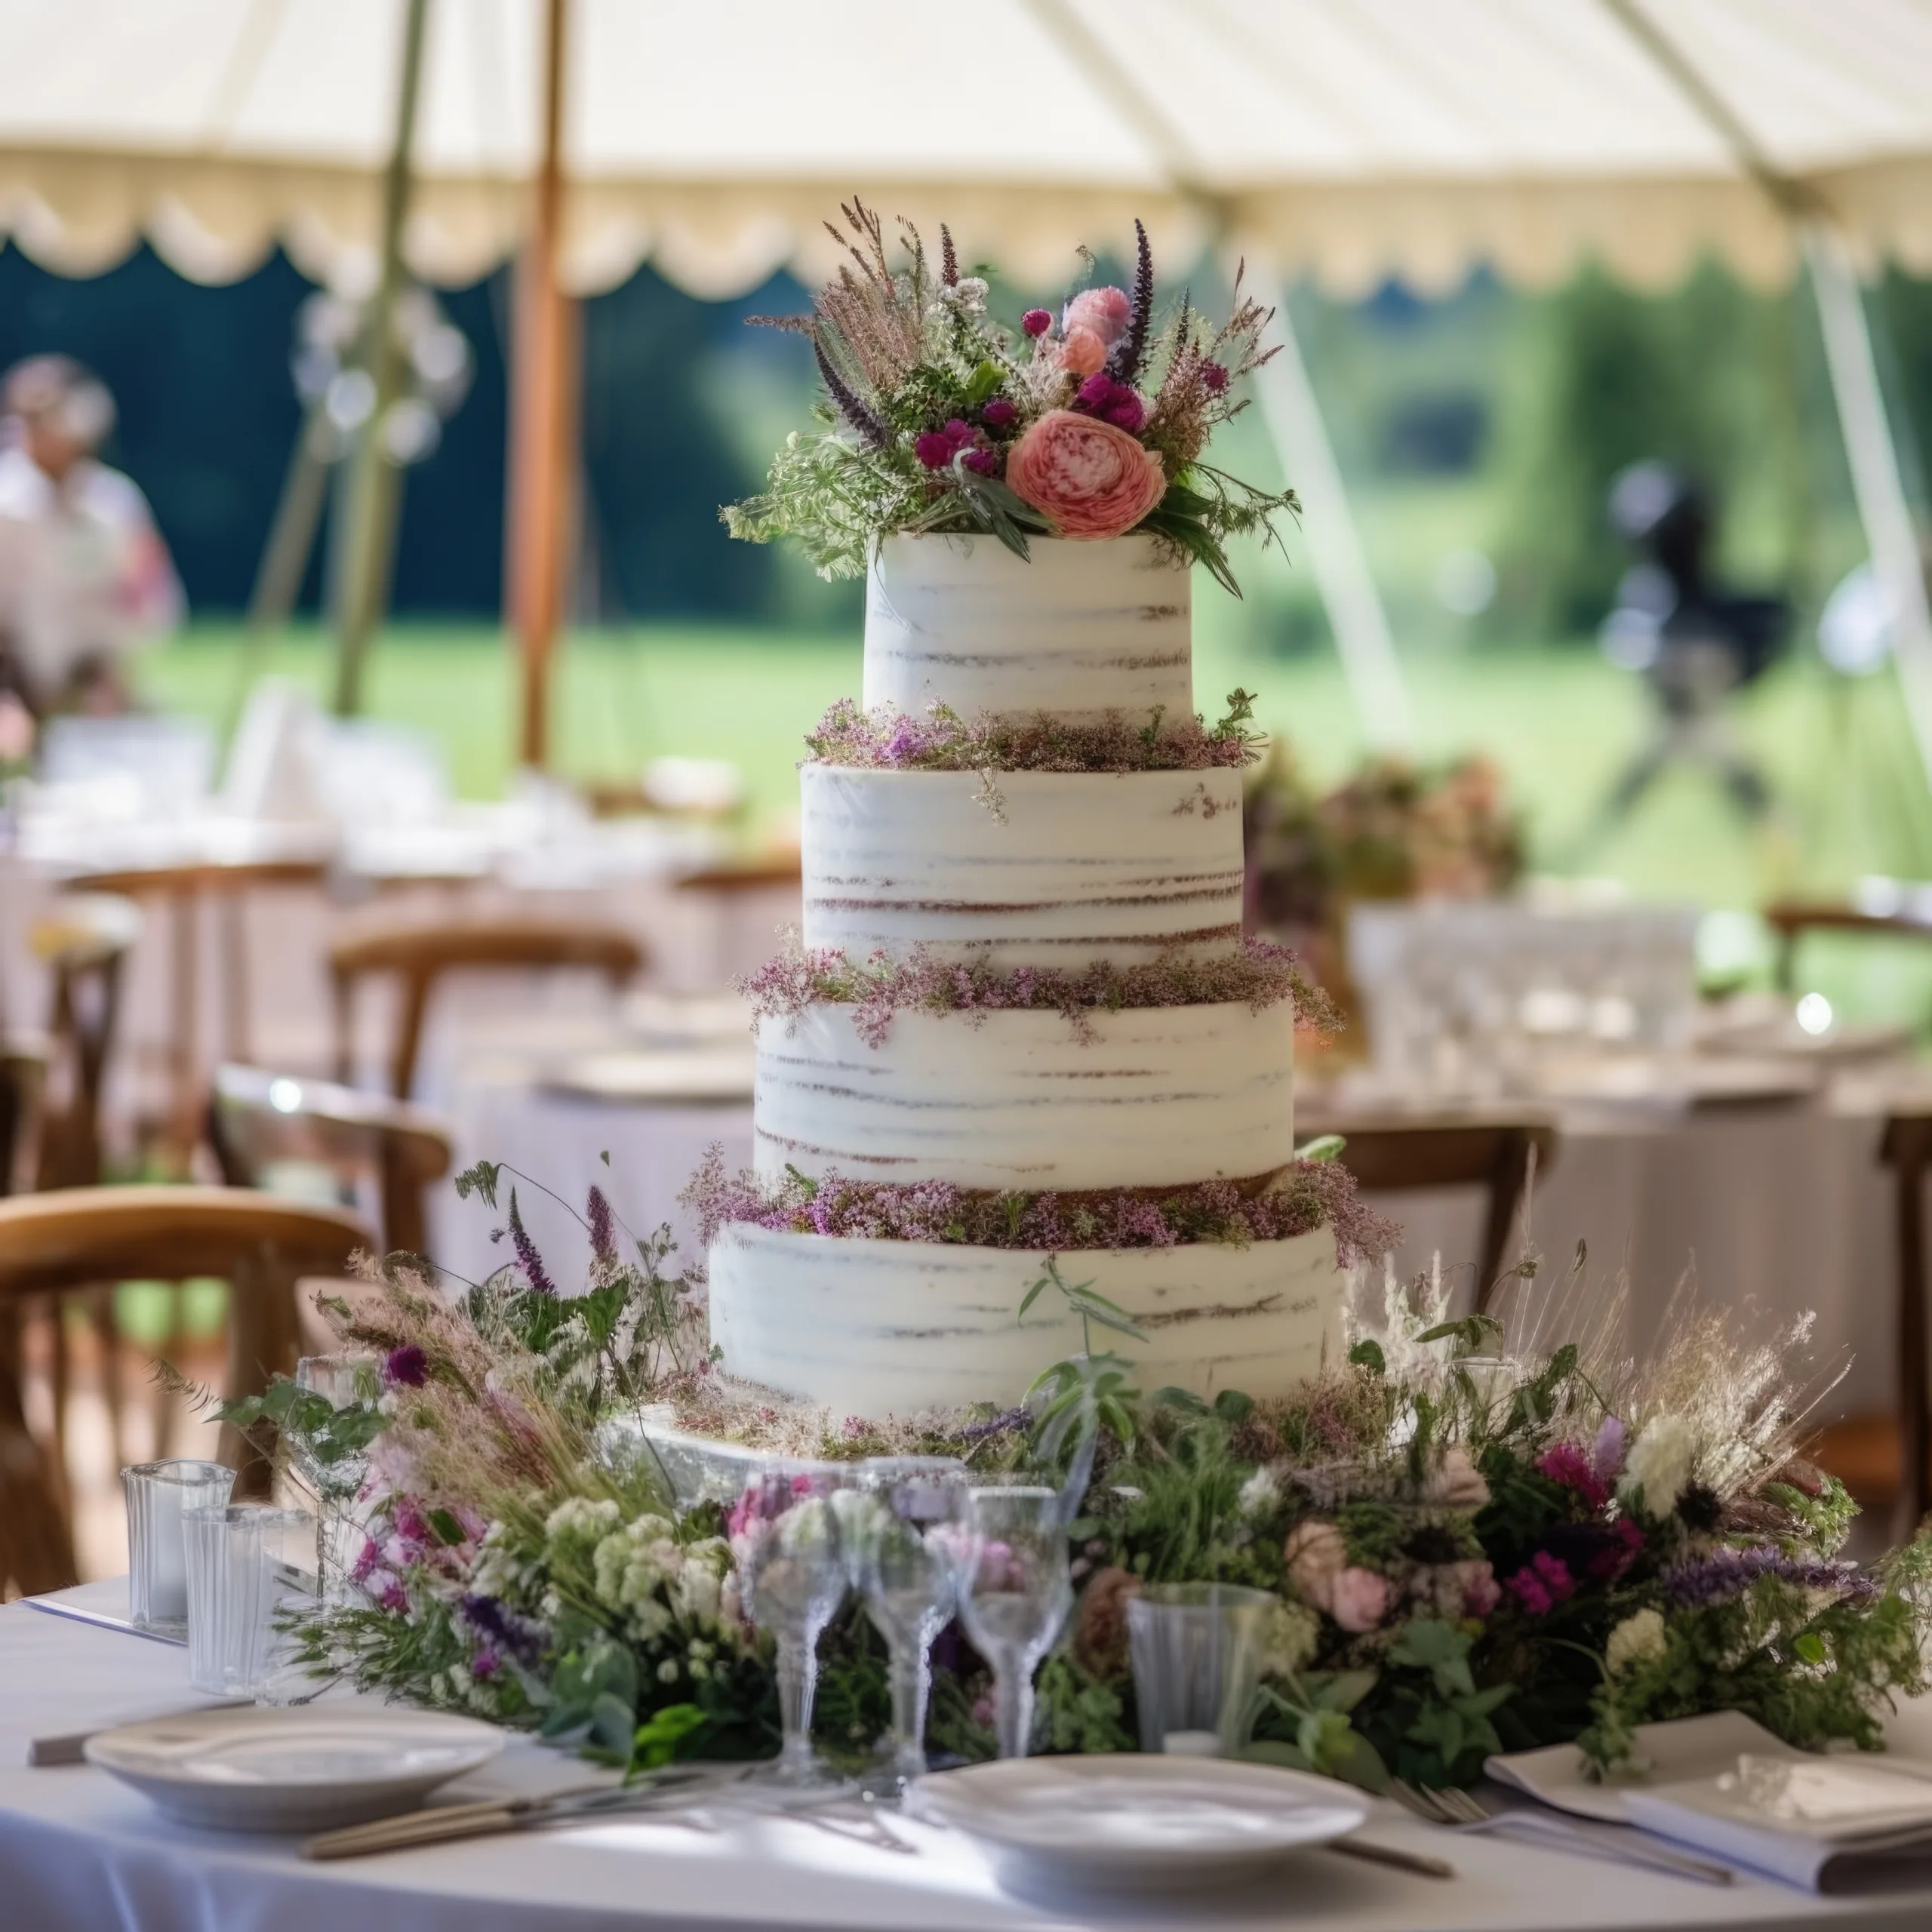 Organic farm: a wedding cake sitting on top of a table.